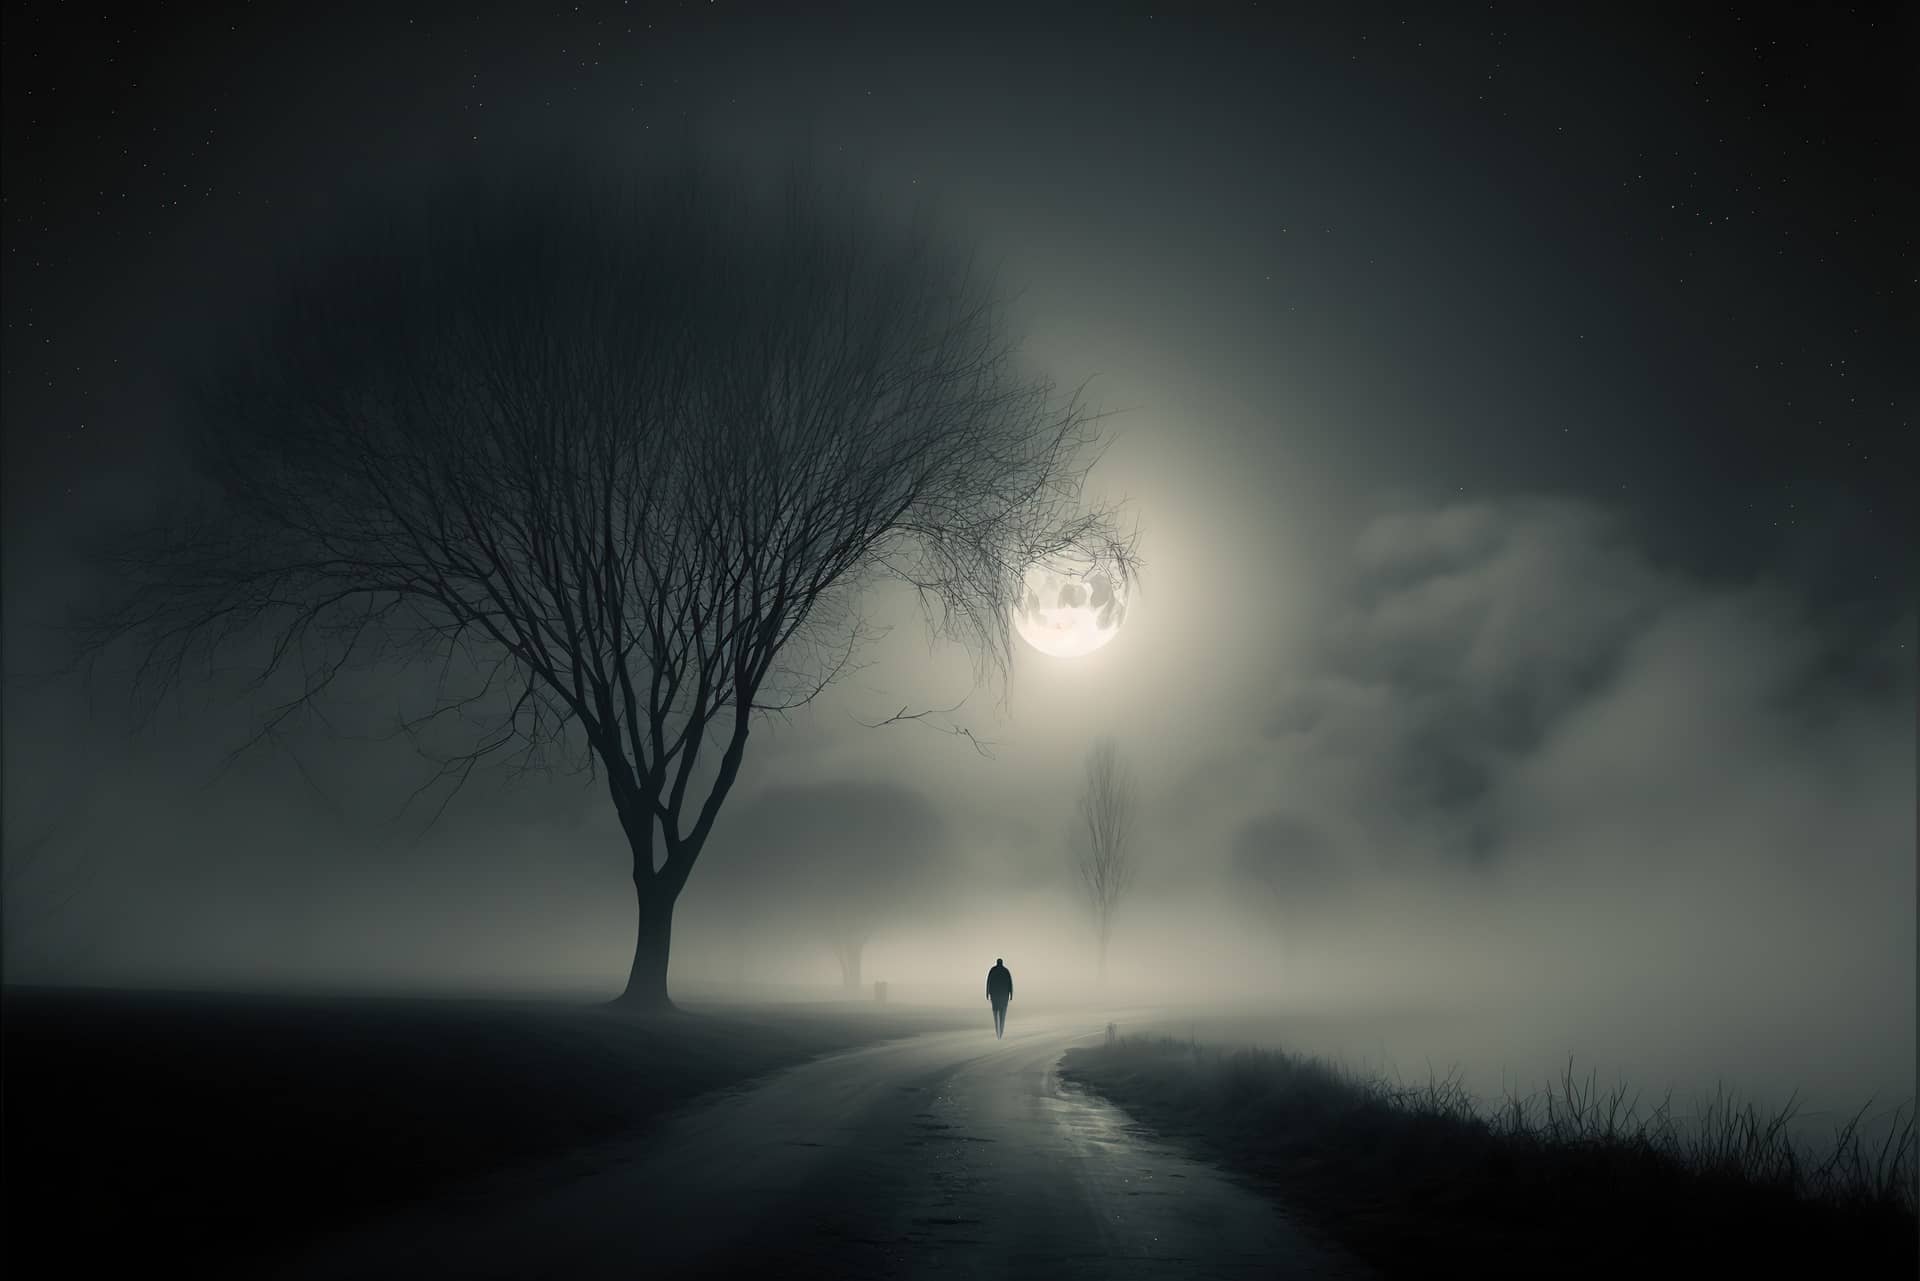 Person walking alone foggy night underneath pale moonlight